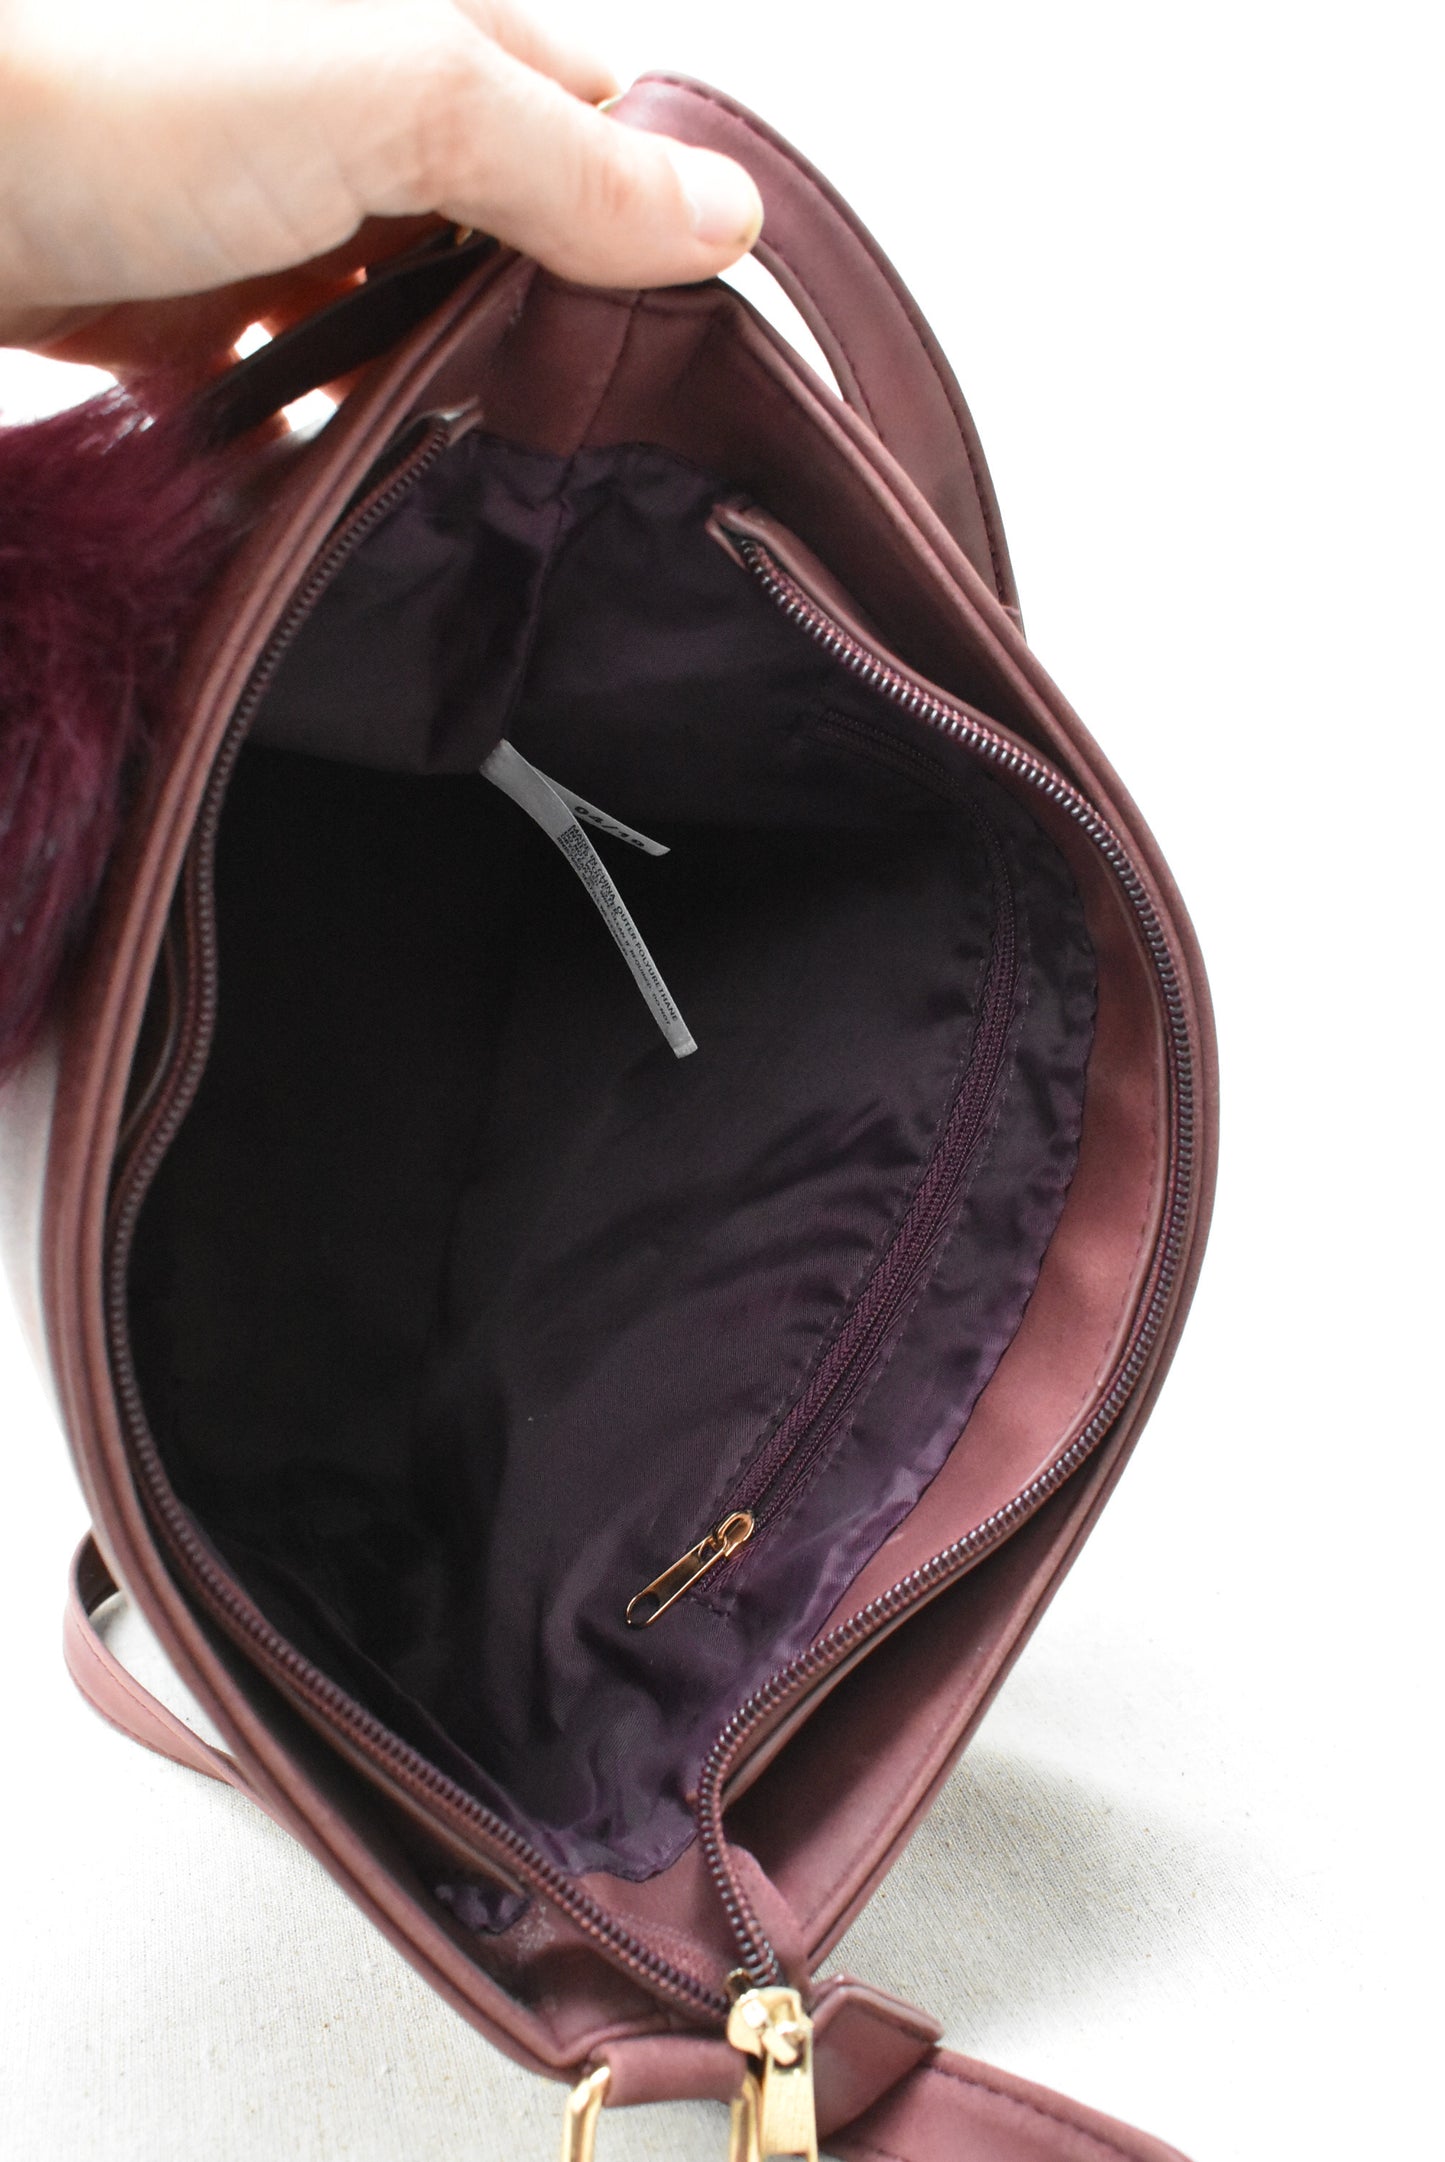 Burgundy bag with fuzzy tassle key ring (New)